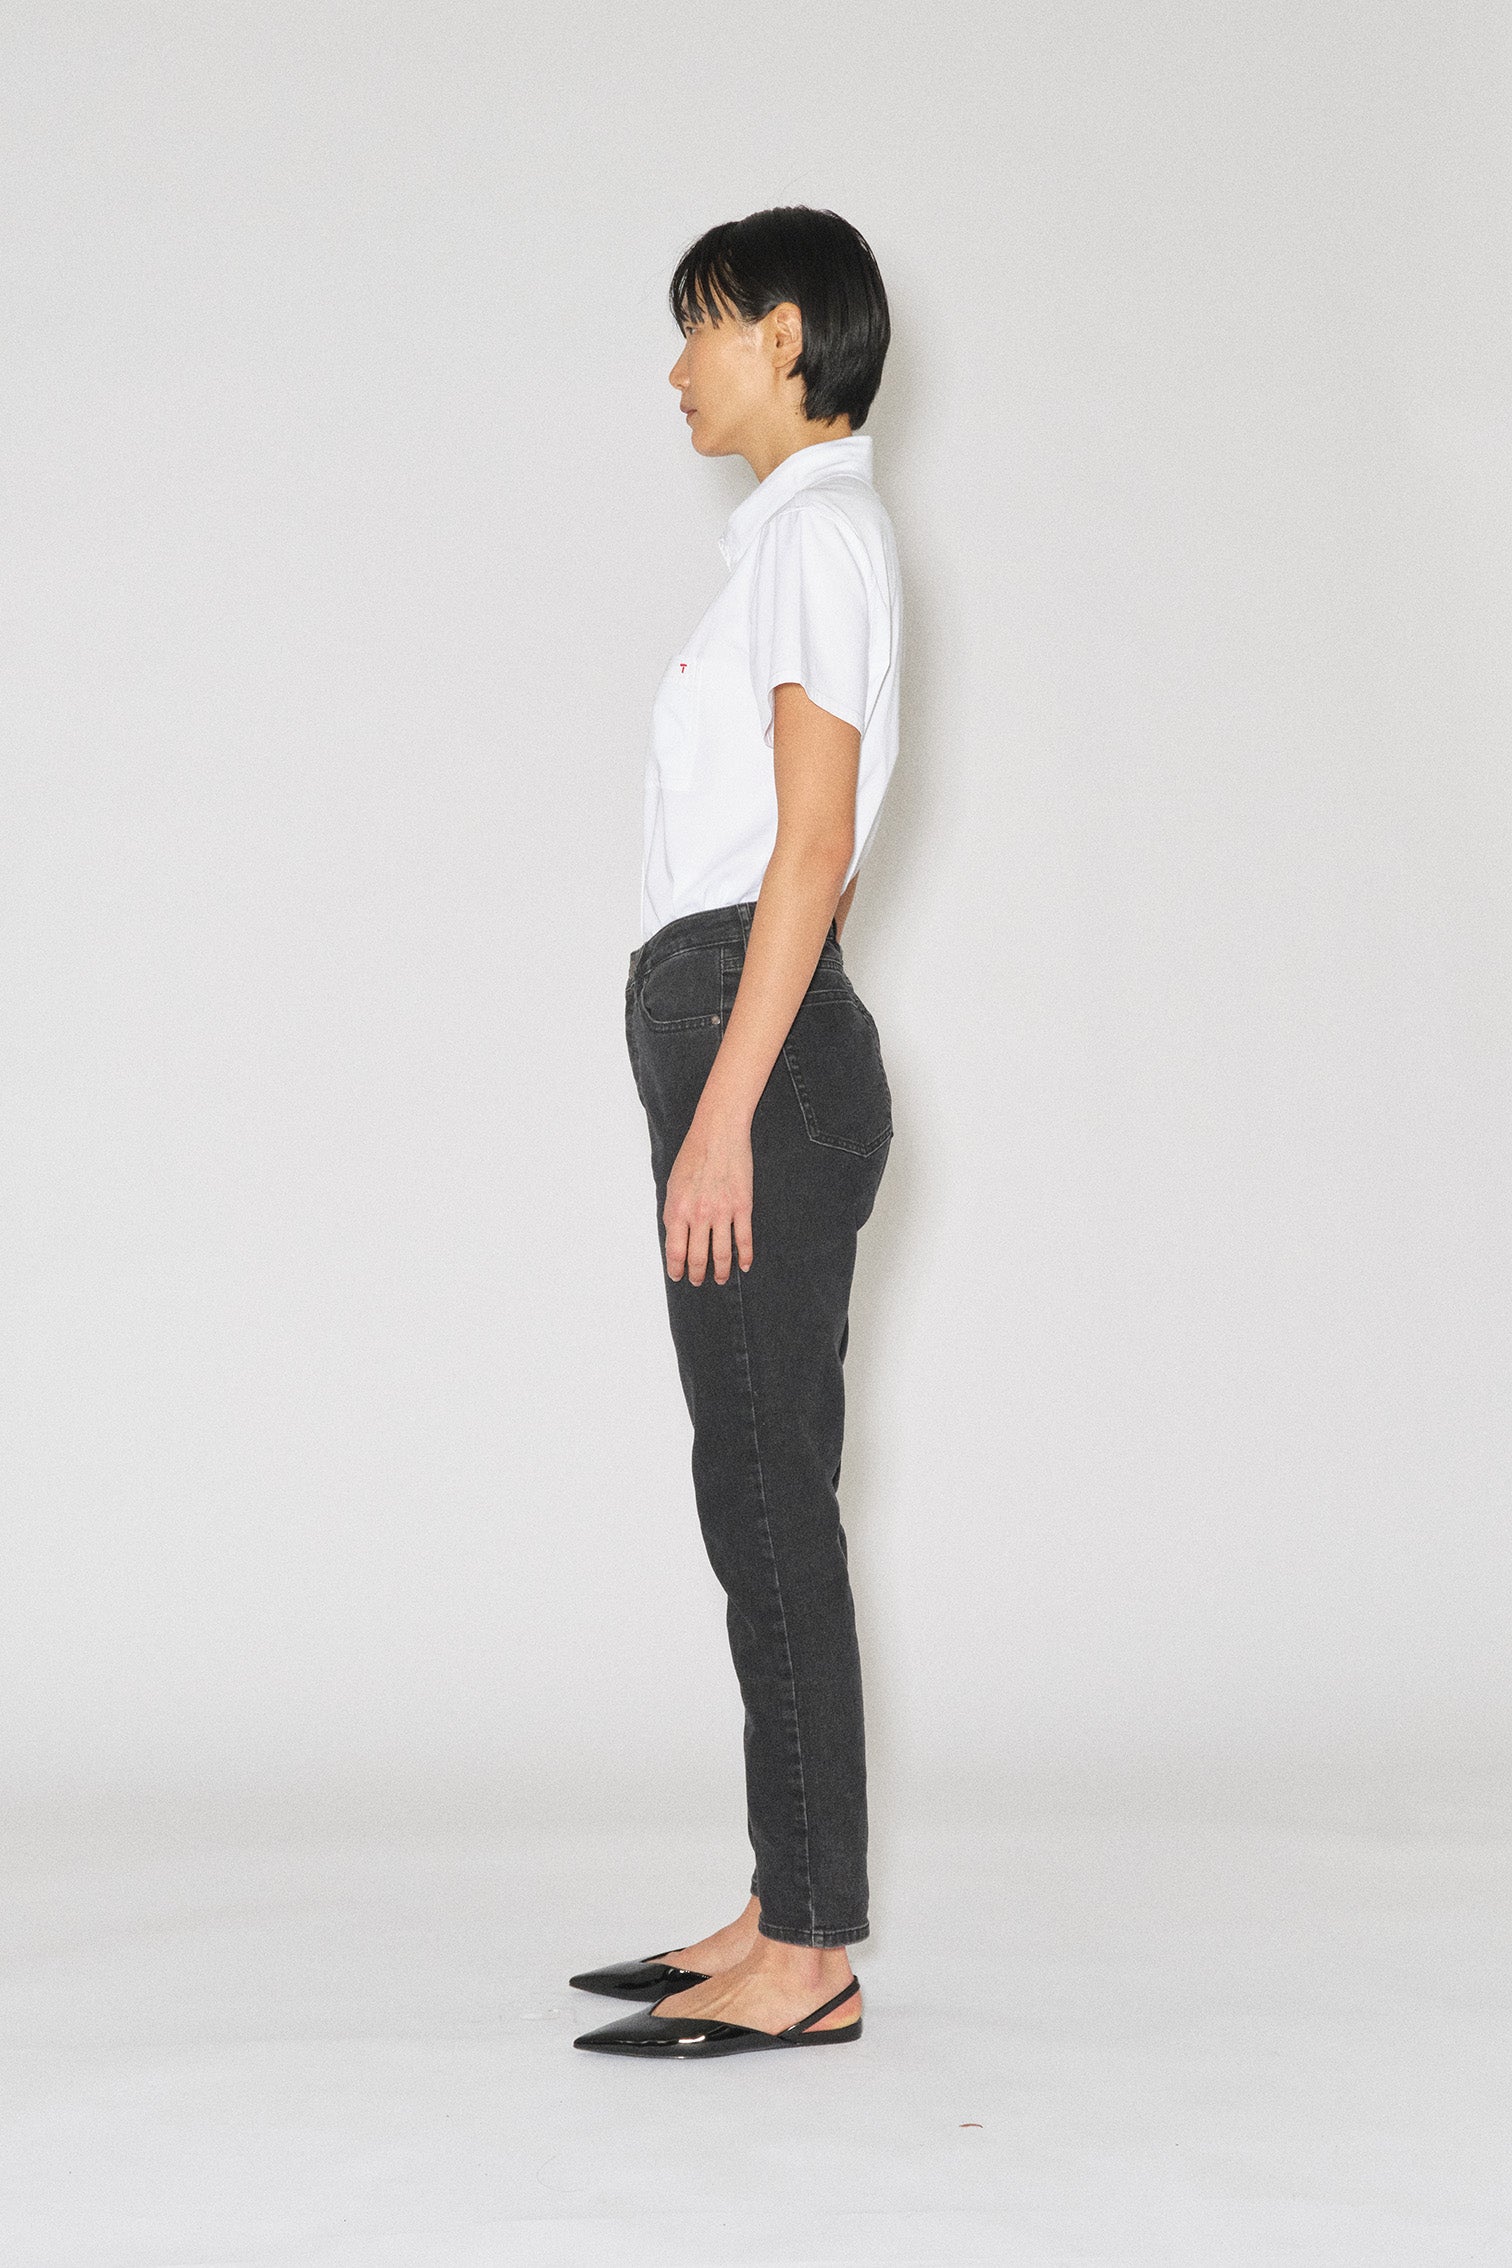 Tomorrow TMRW Hepburn Jeans - Original Black Jeans & Pants 9 Black